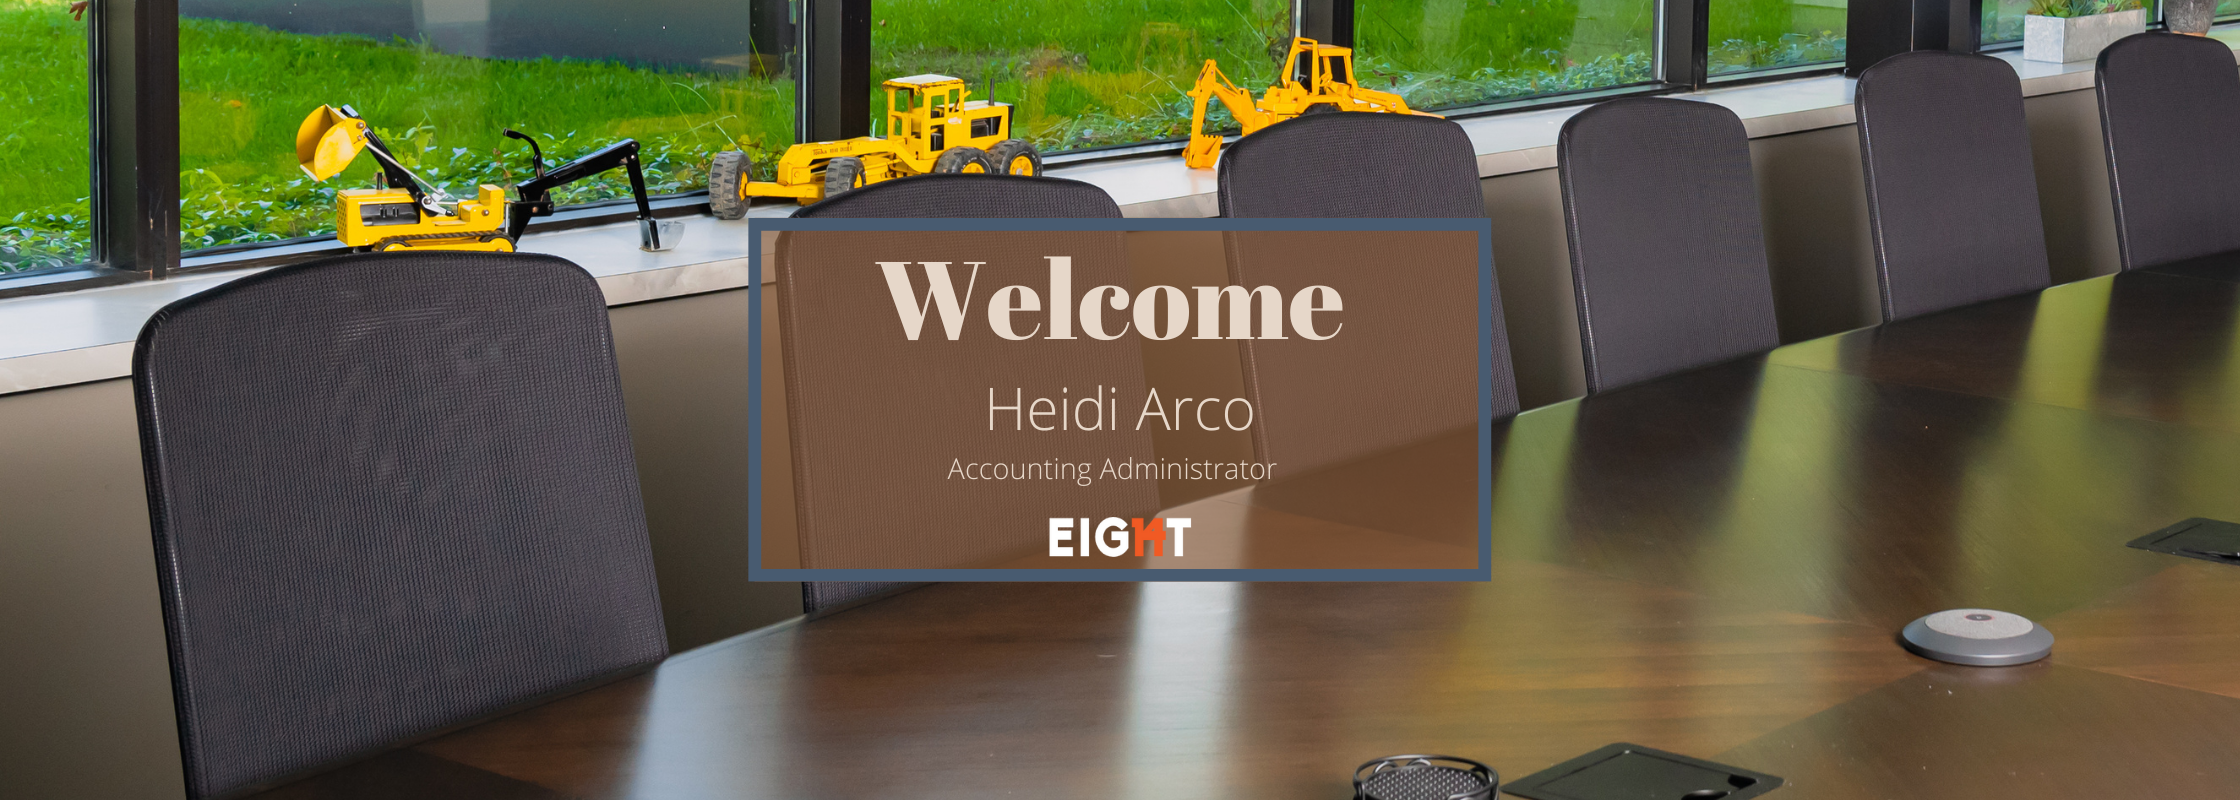 EIG14T Welcomes Heidi Arco, Accounting Administrator